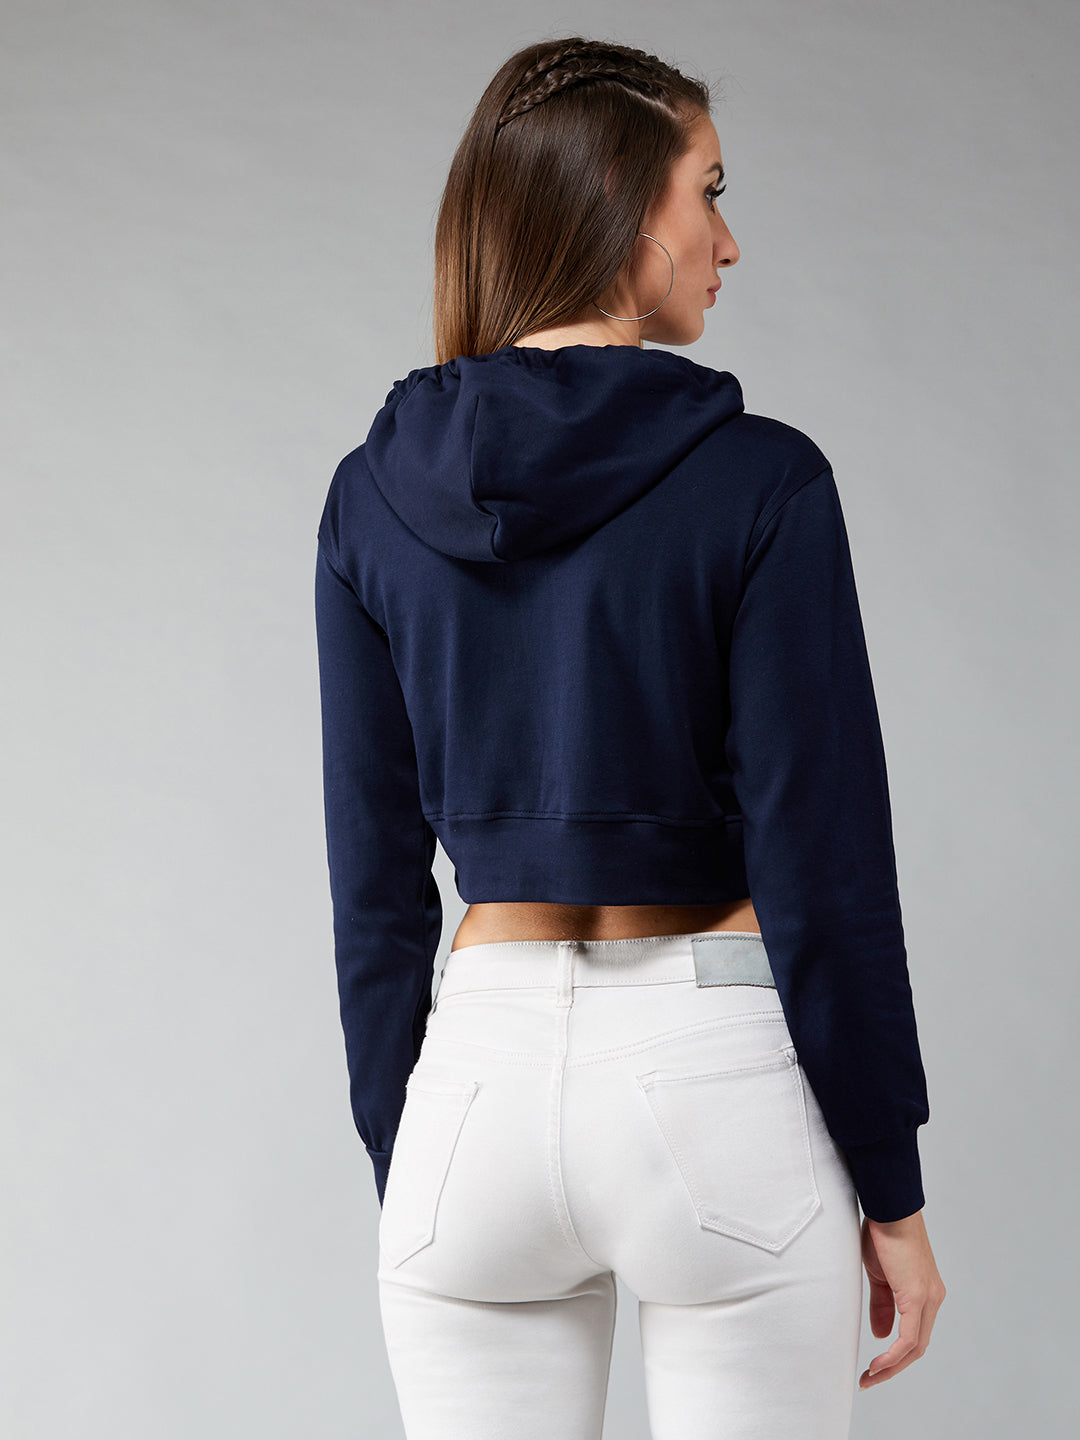 Women's Navy Blue Solid Round Neck Full Sleeve Hooded Boxy Crop Sweatshirt